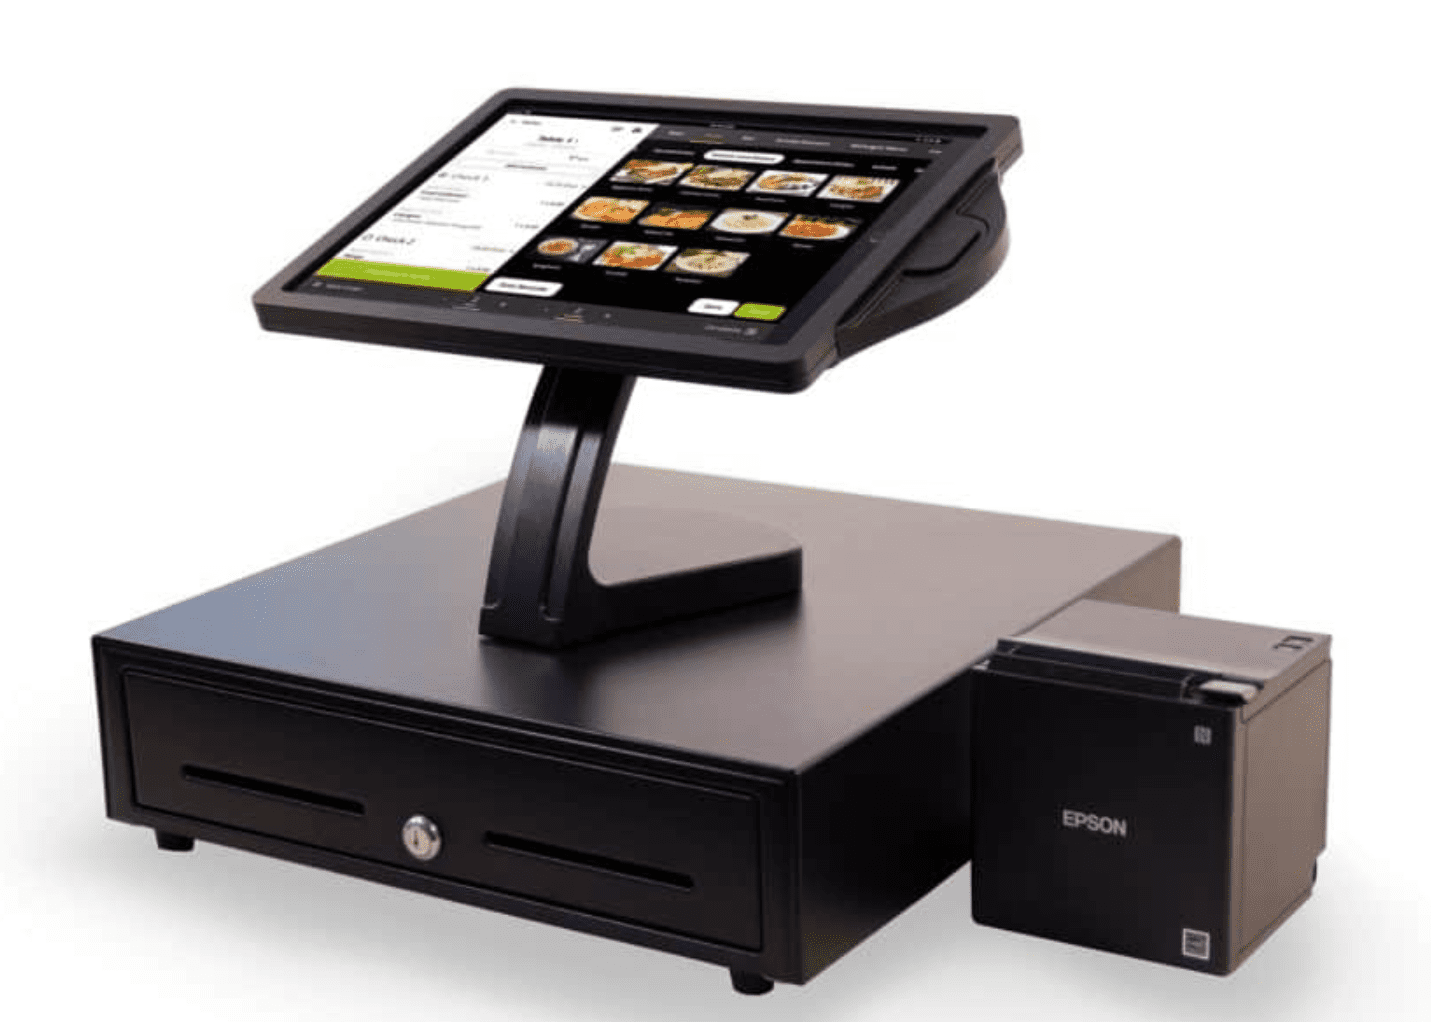 Lavu iPad, iPad stand, cash drawer, and Epson receipt printer